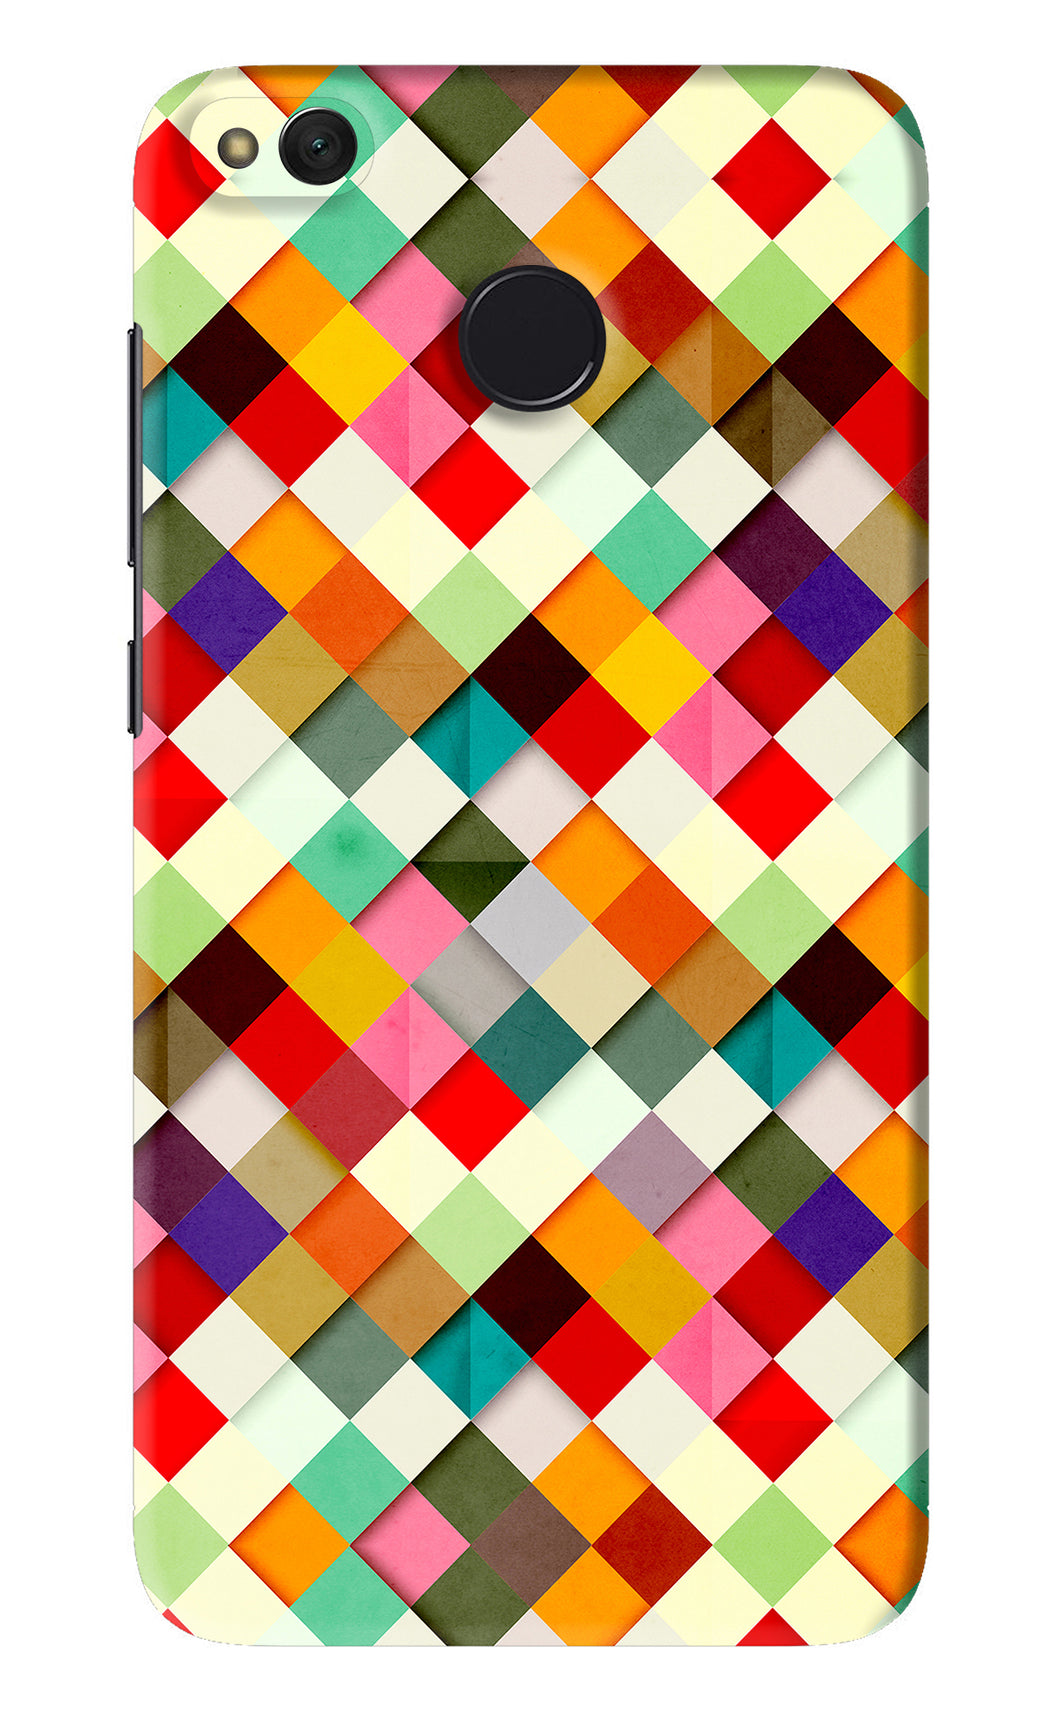 Geometric Abstract Colorful Xiaomi Redmi 4 Back Skin Wrap